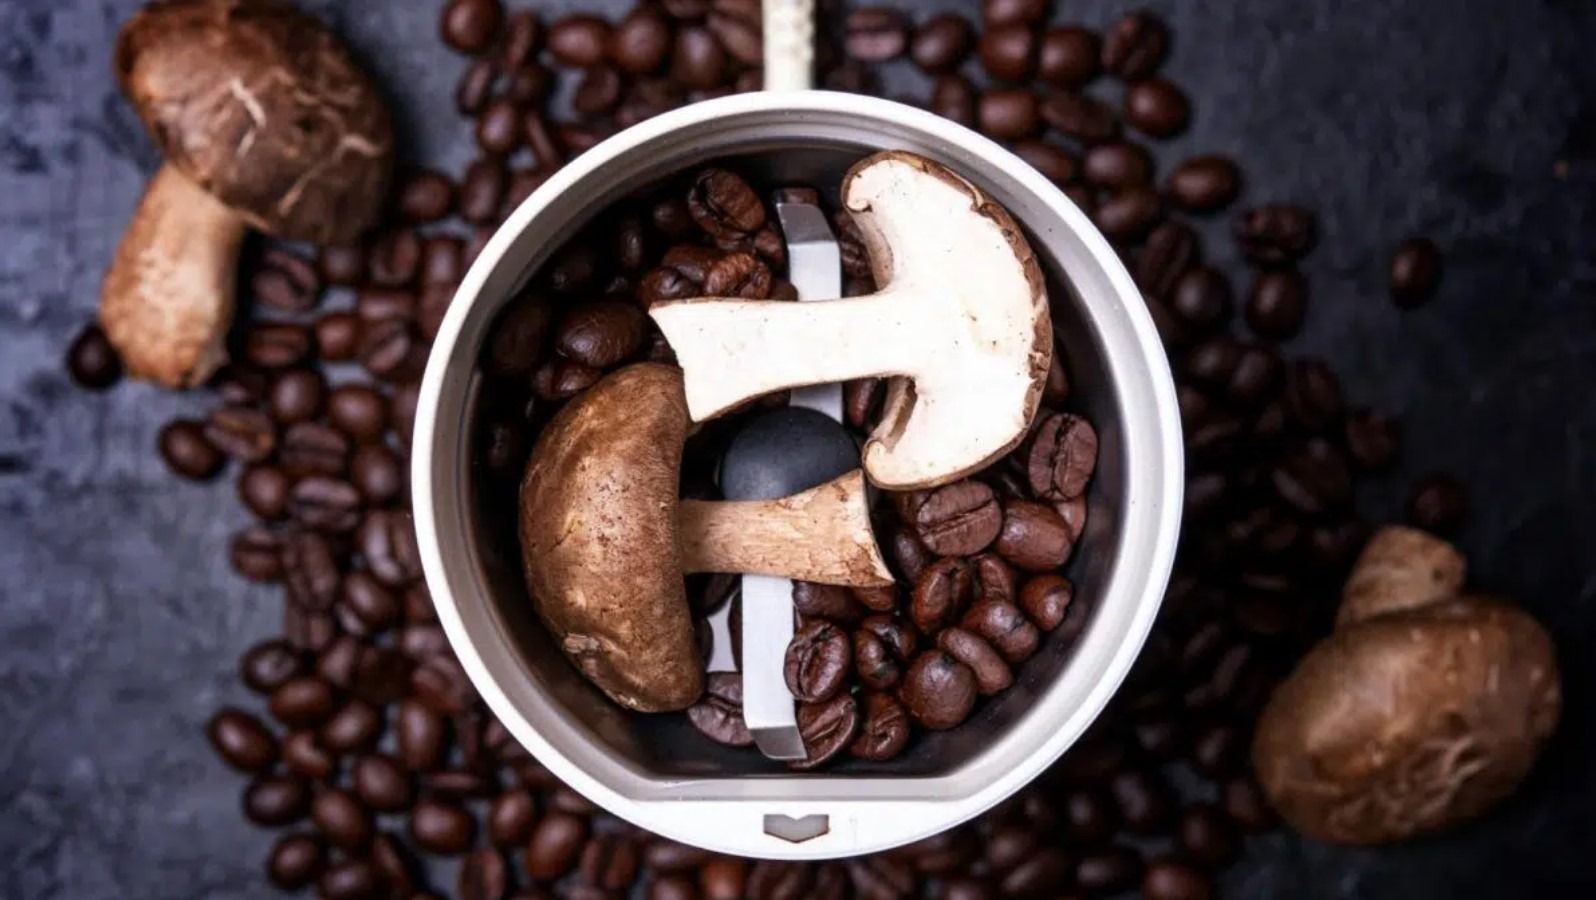 Mushroom Coffee: Drink for a Unique Caffeine Experience